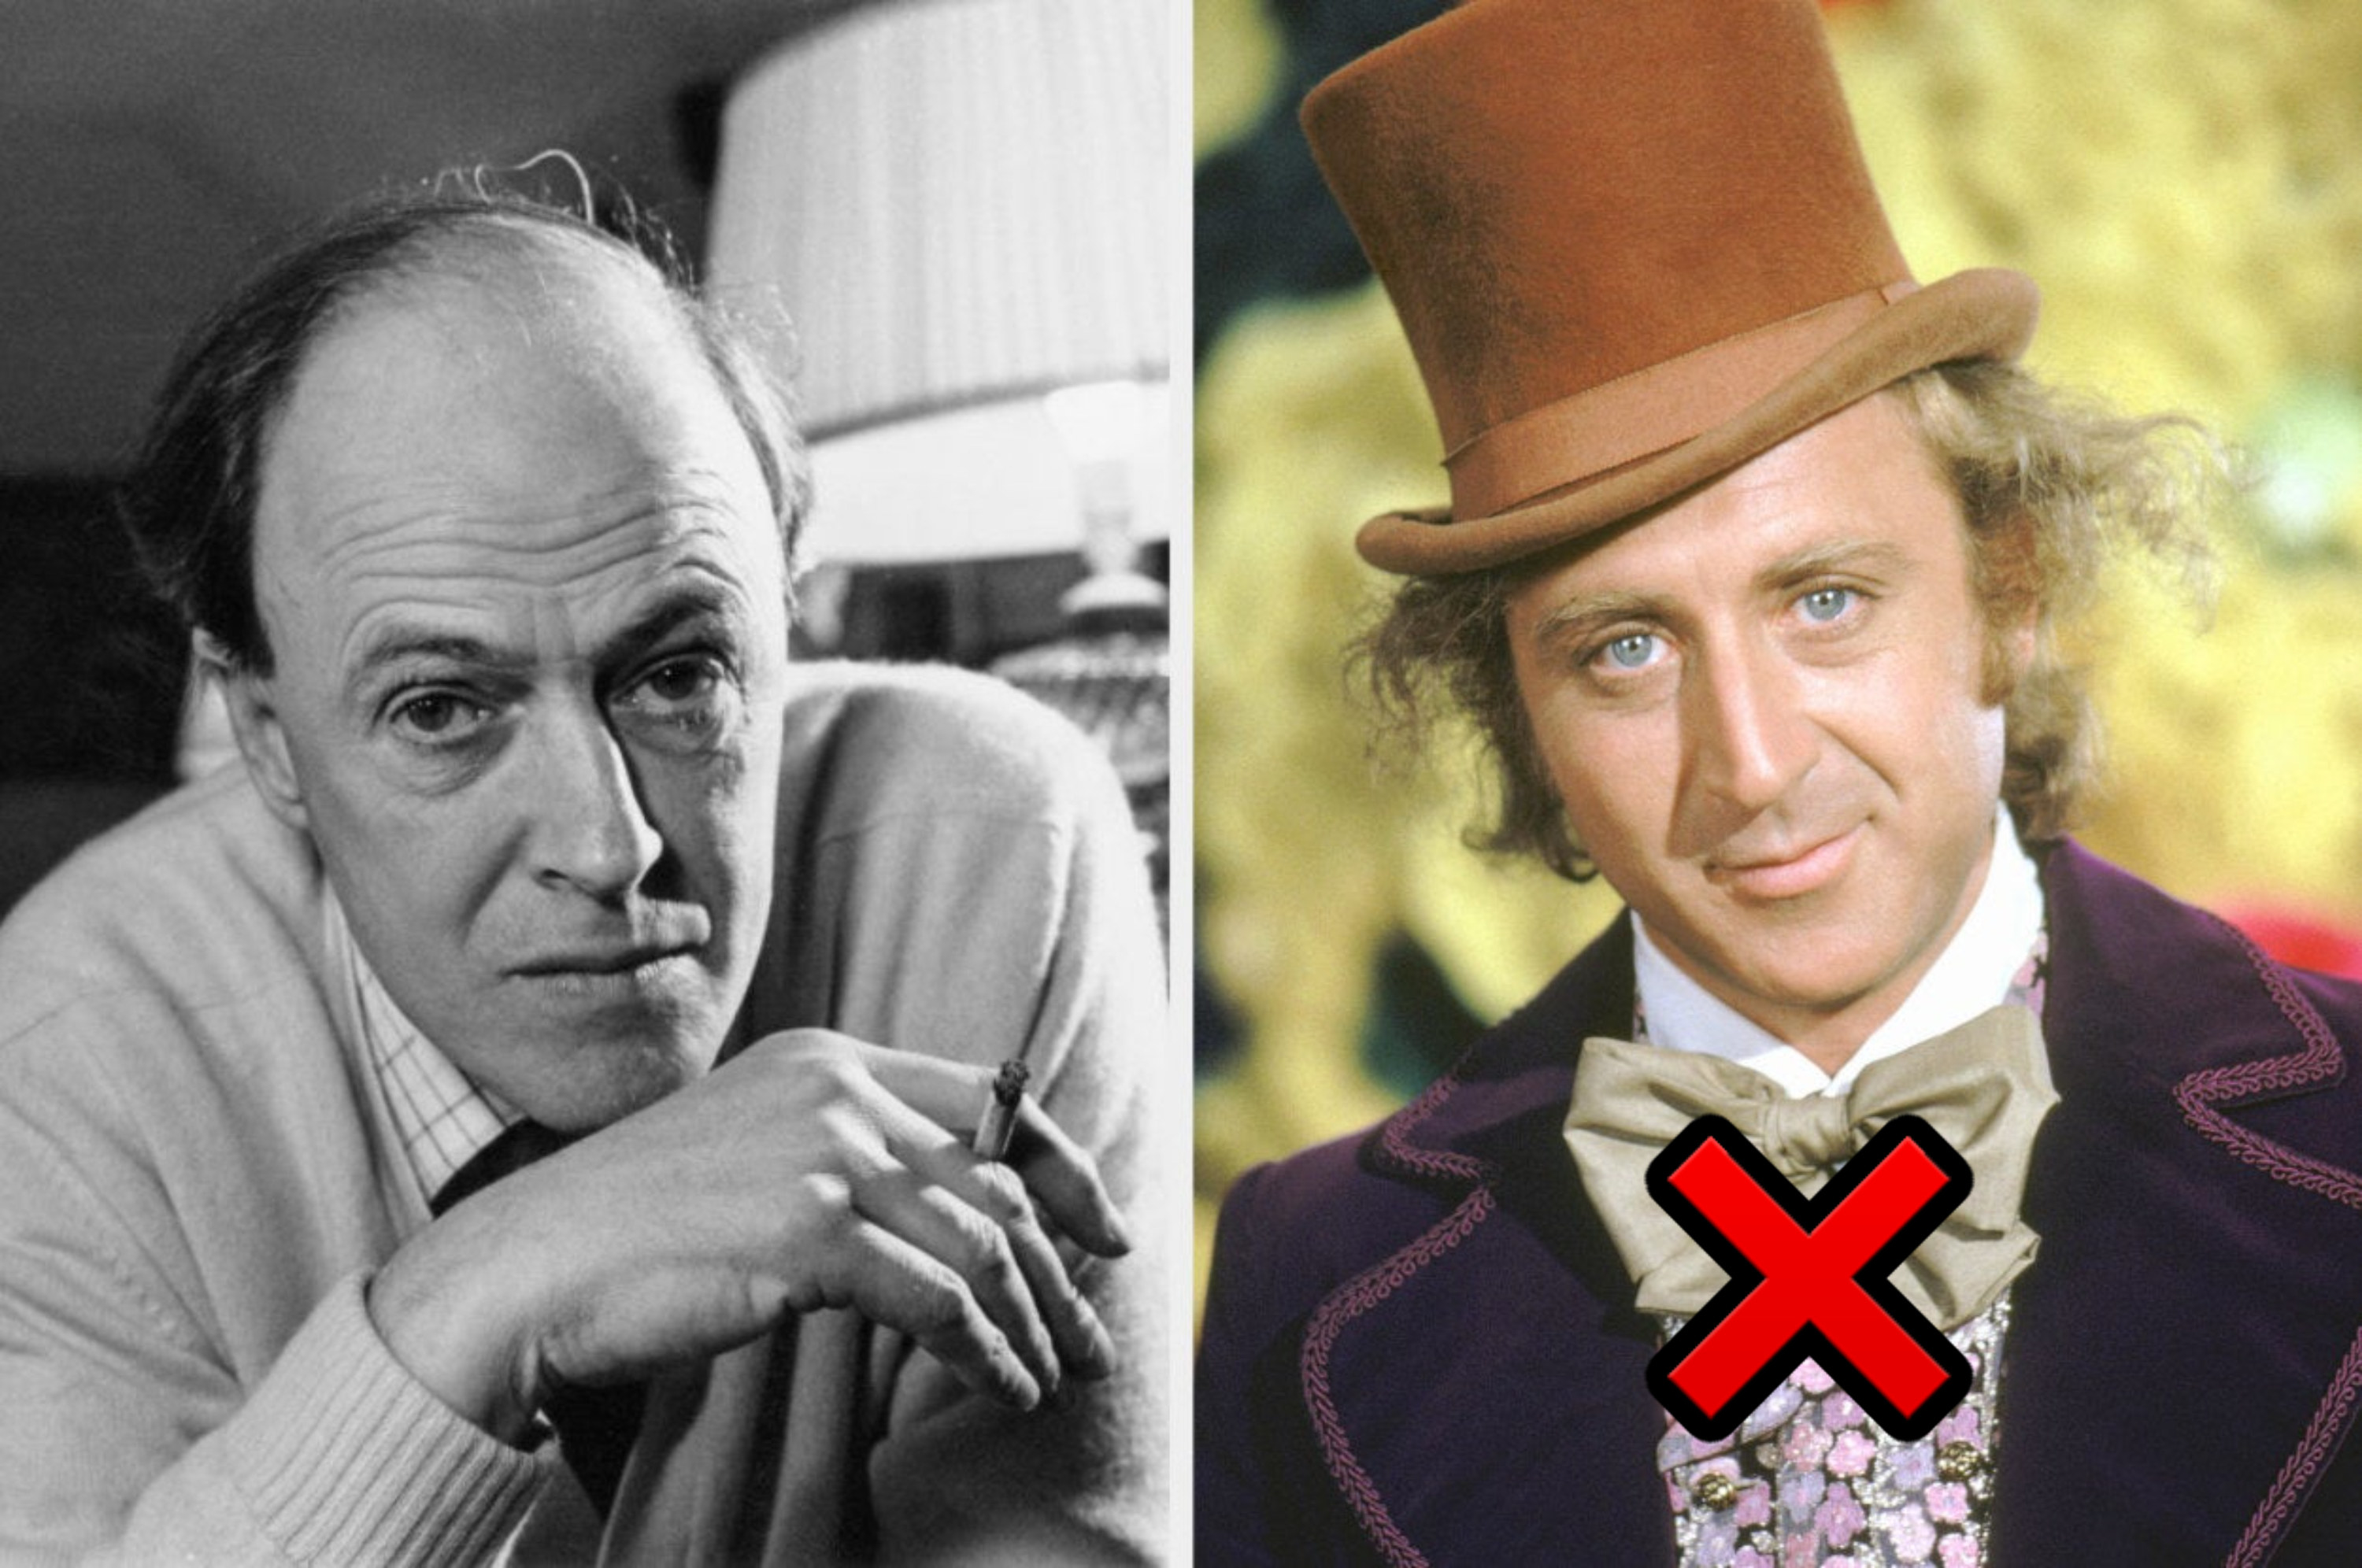 Roald Dahl and Gene Wilder as Willy Wonka